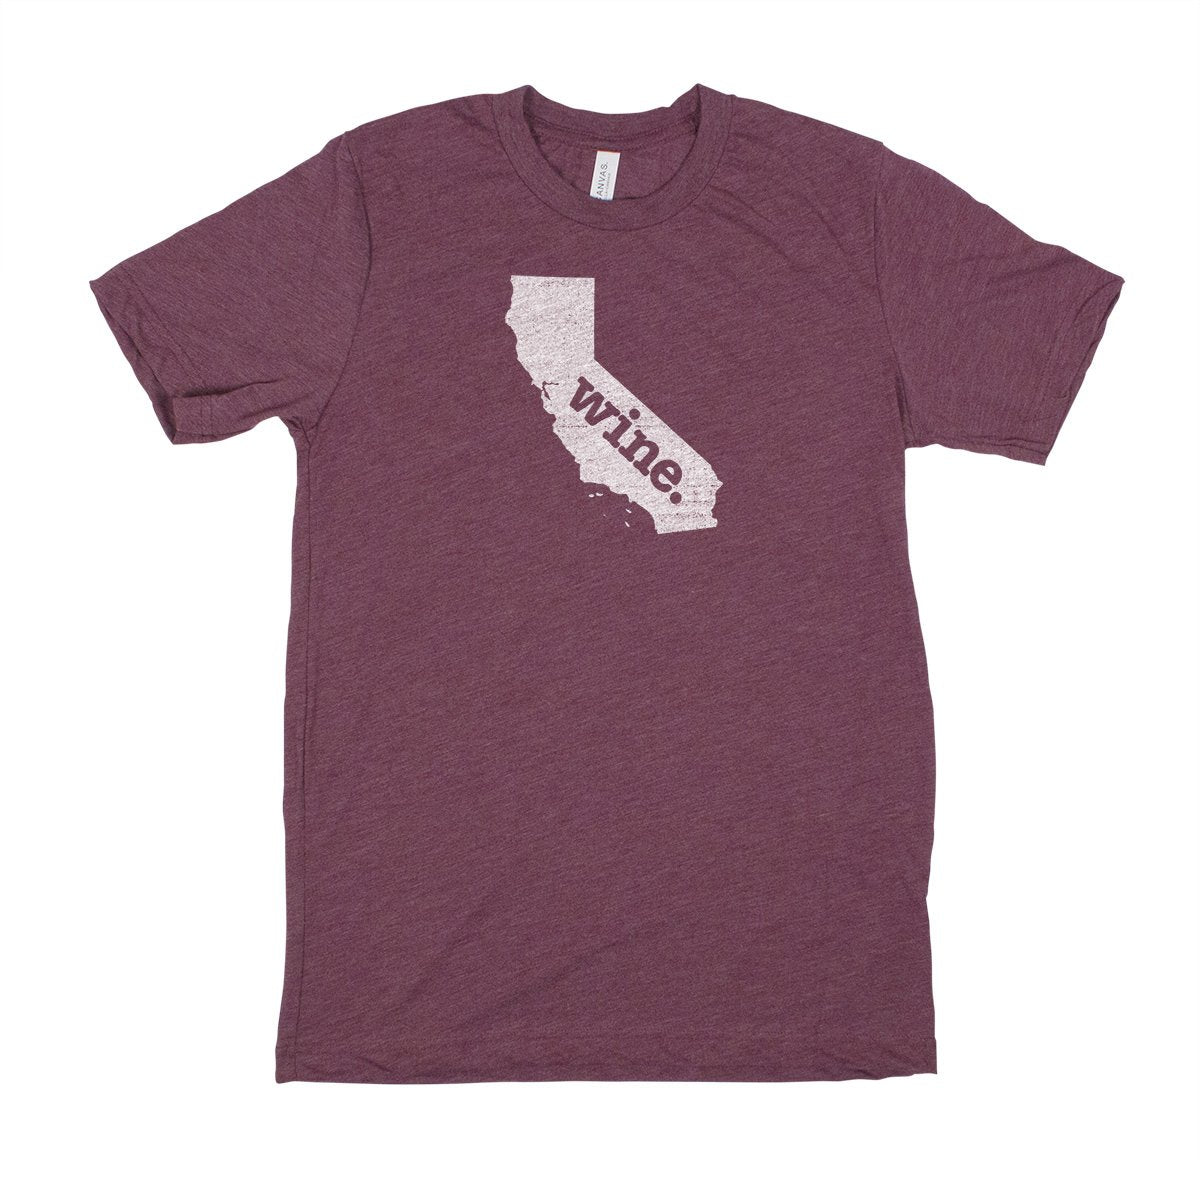 run. Men's Unisex T-Shirt - Pennsylvania